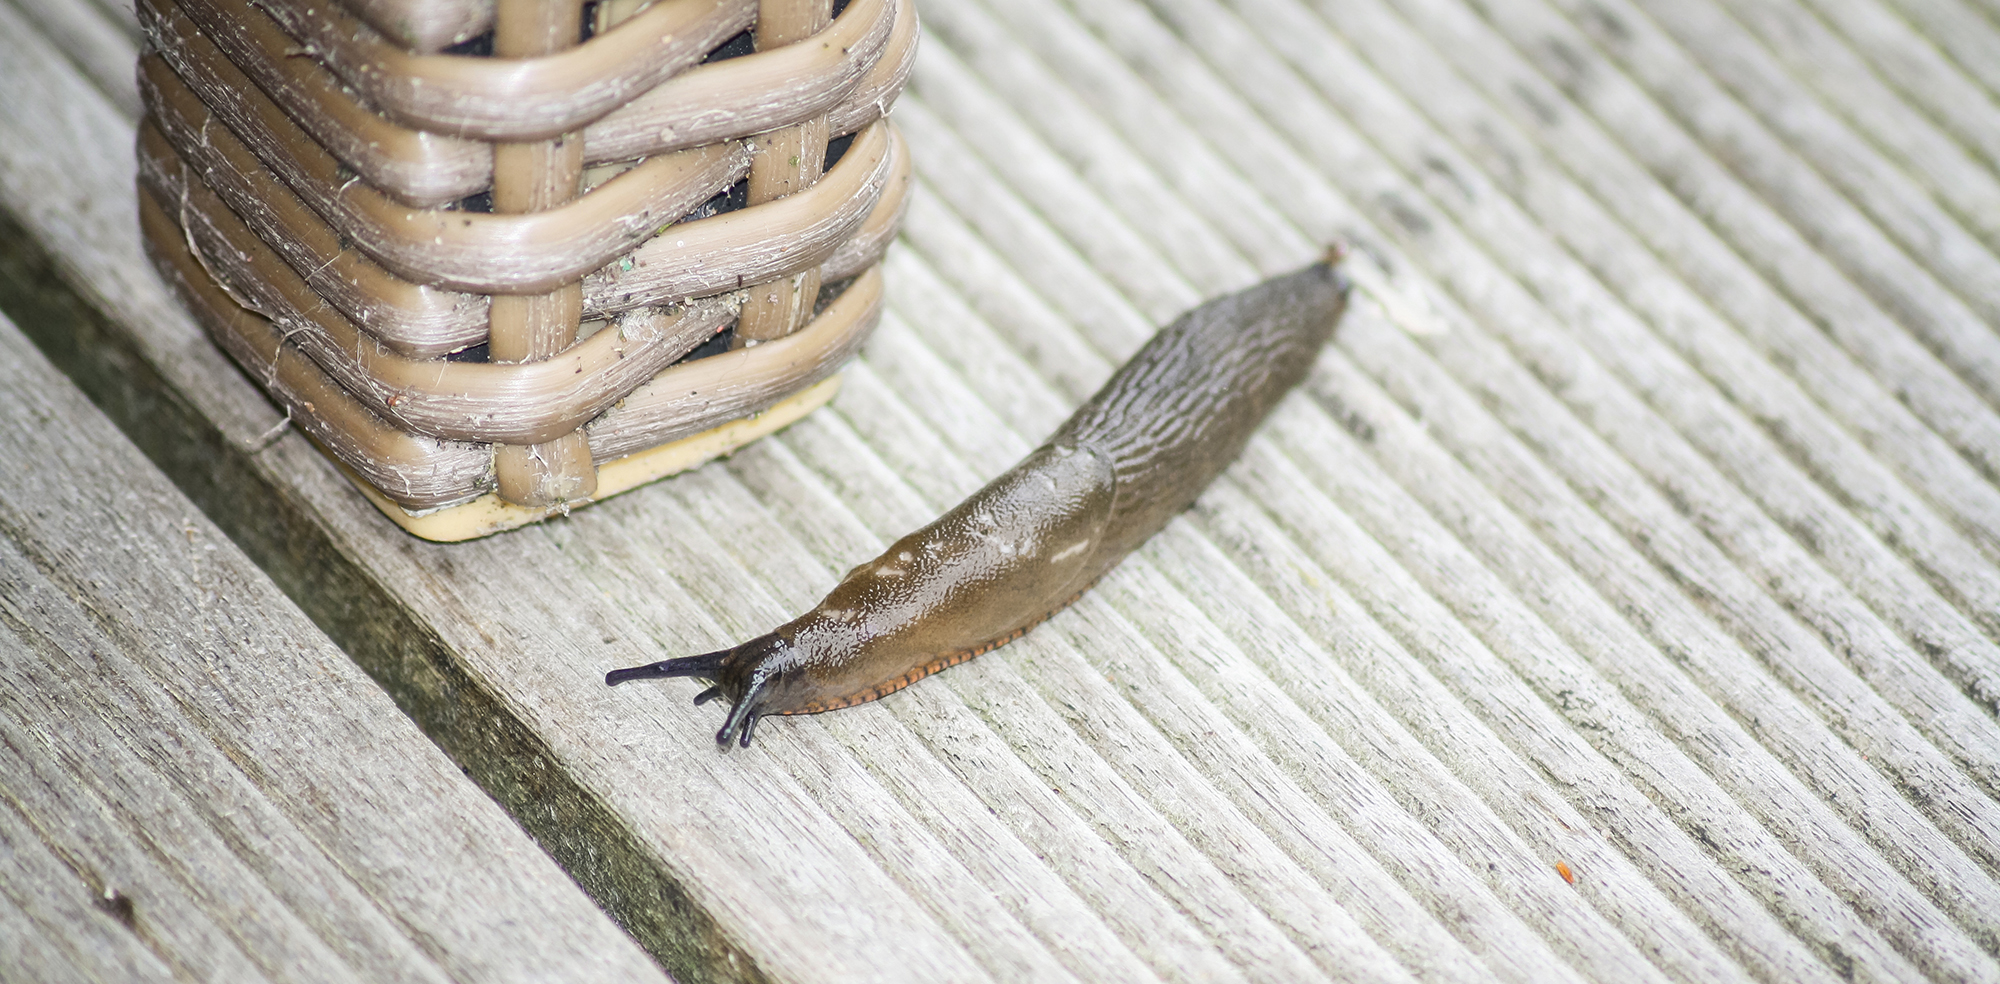 How To Get Rid Of Slugs In The Garden Oversixty